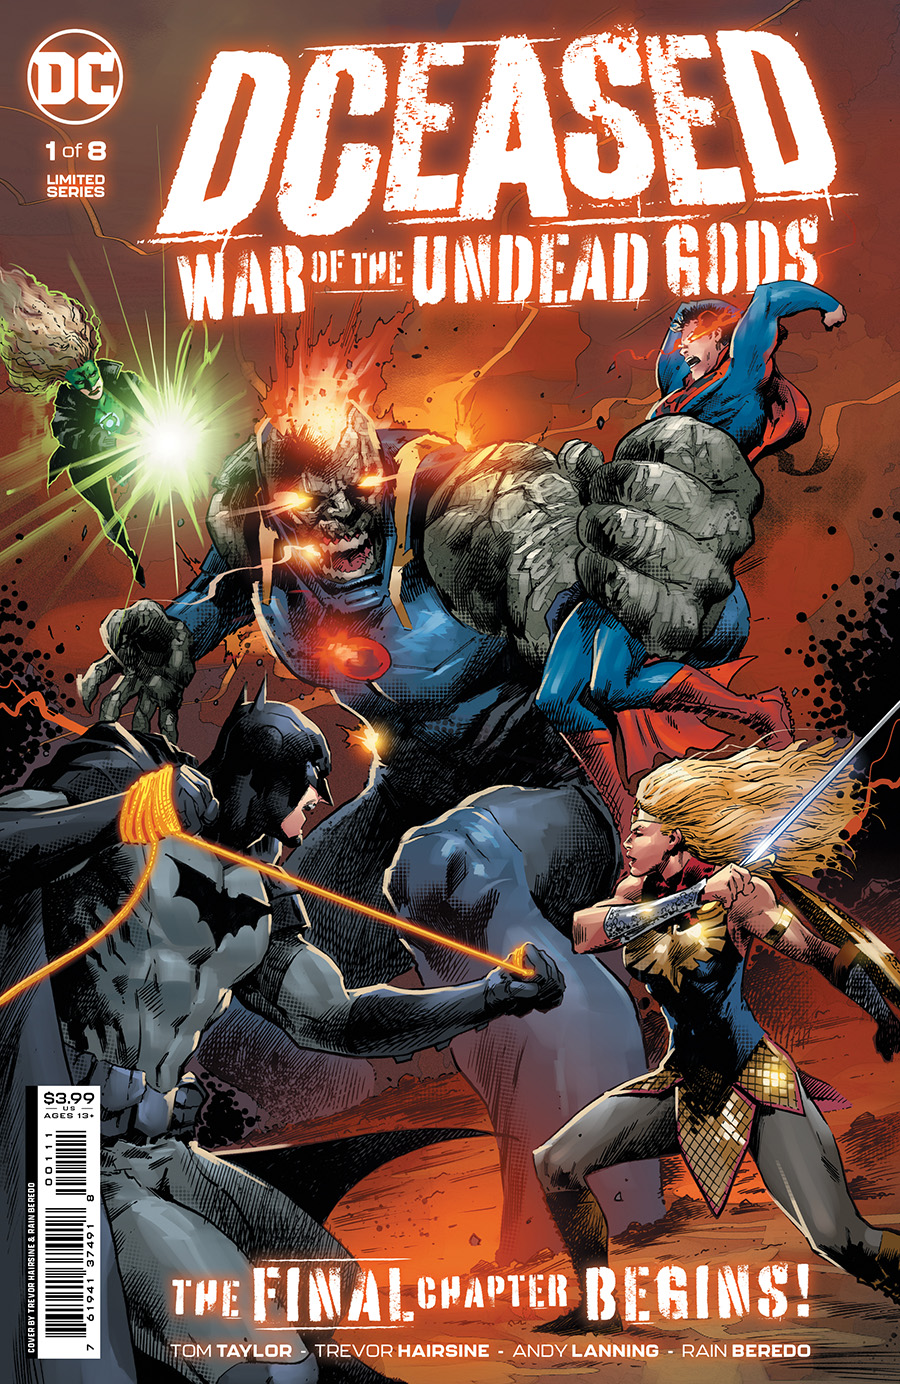 DCeased War Of The Undead Gods #1 Cover A Regular Trevor Hairsine Cover